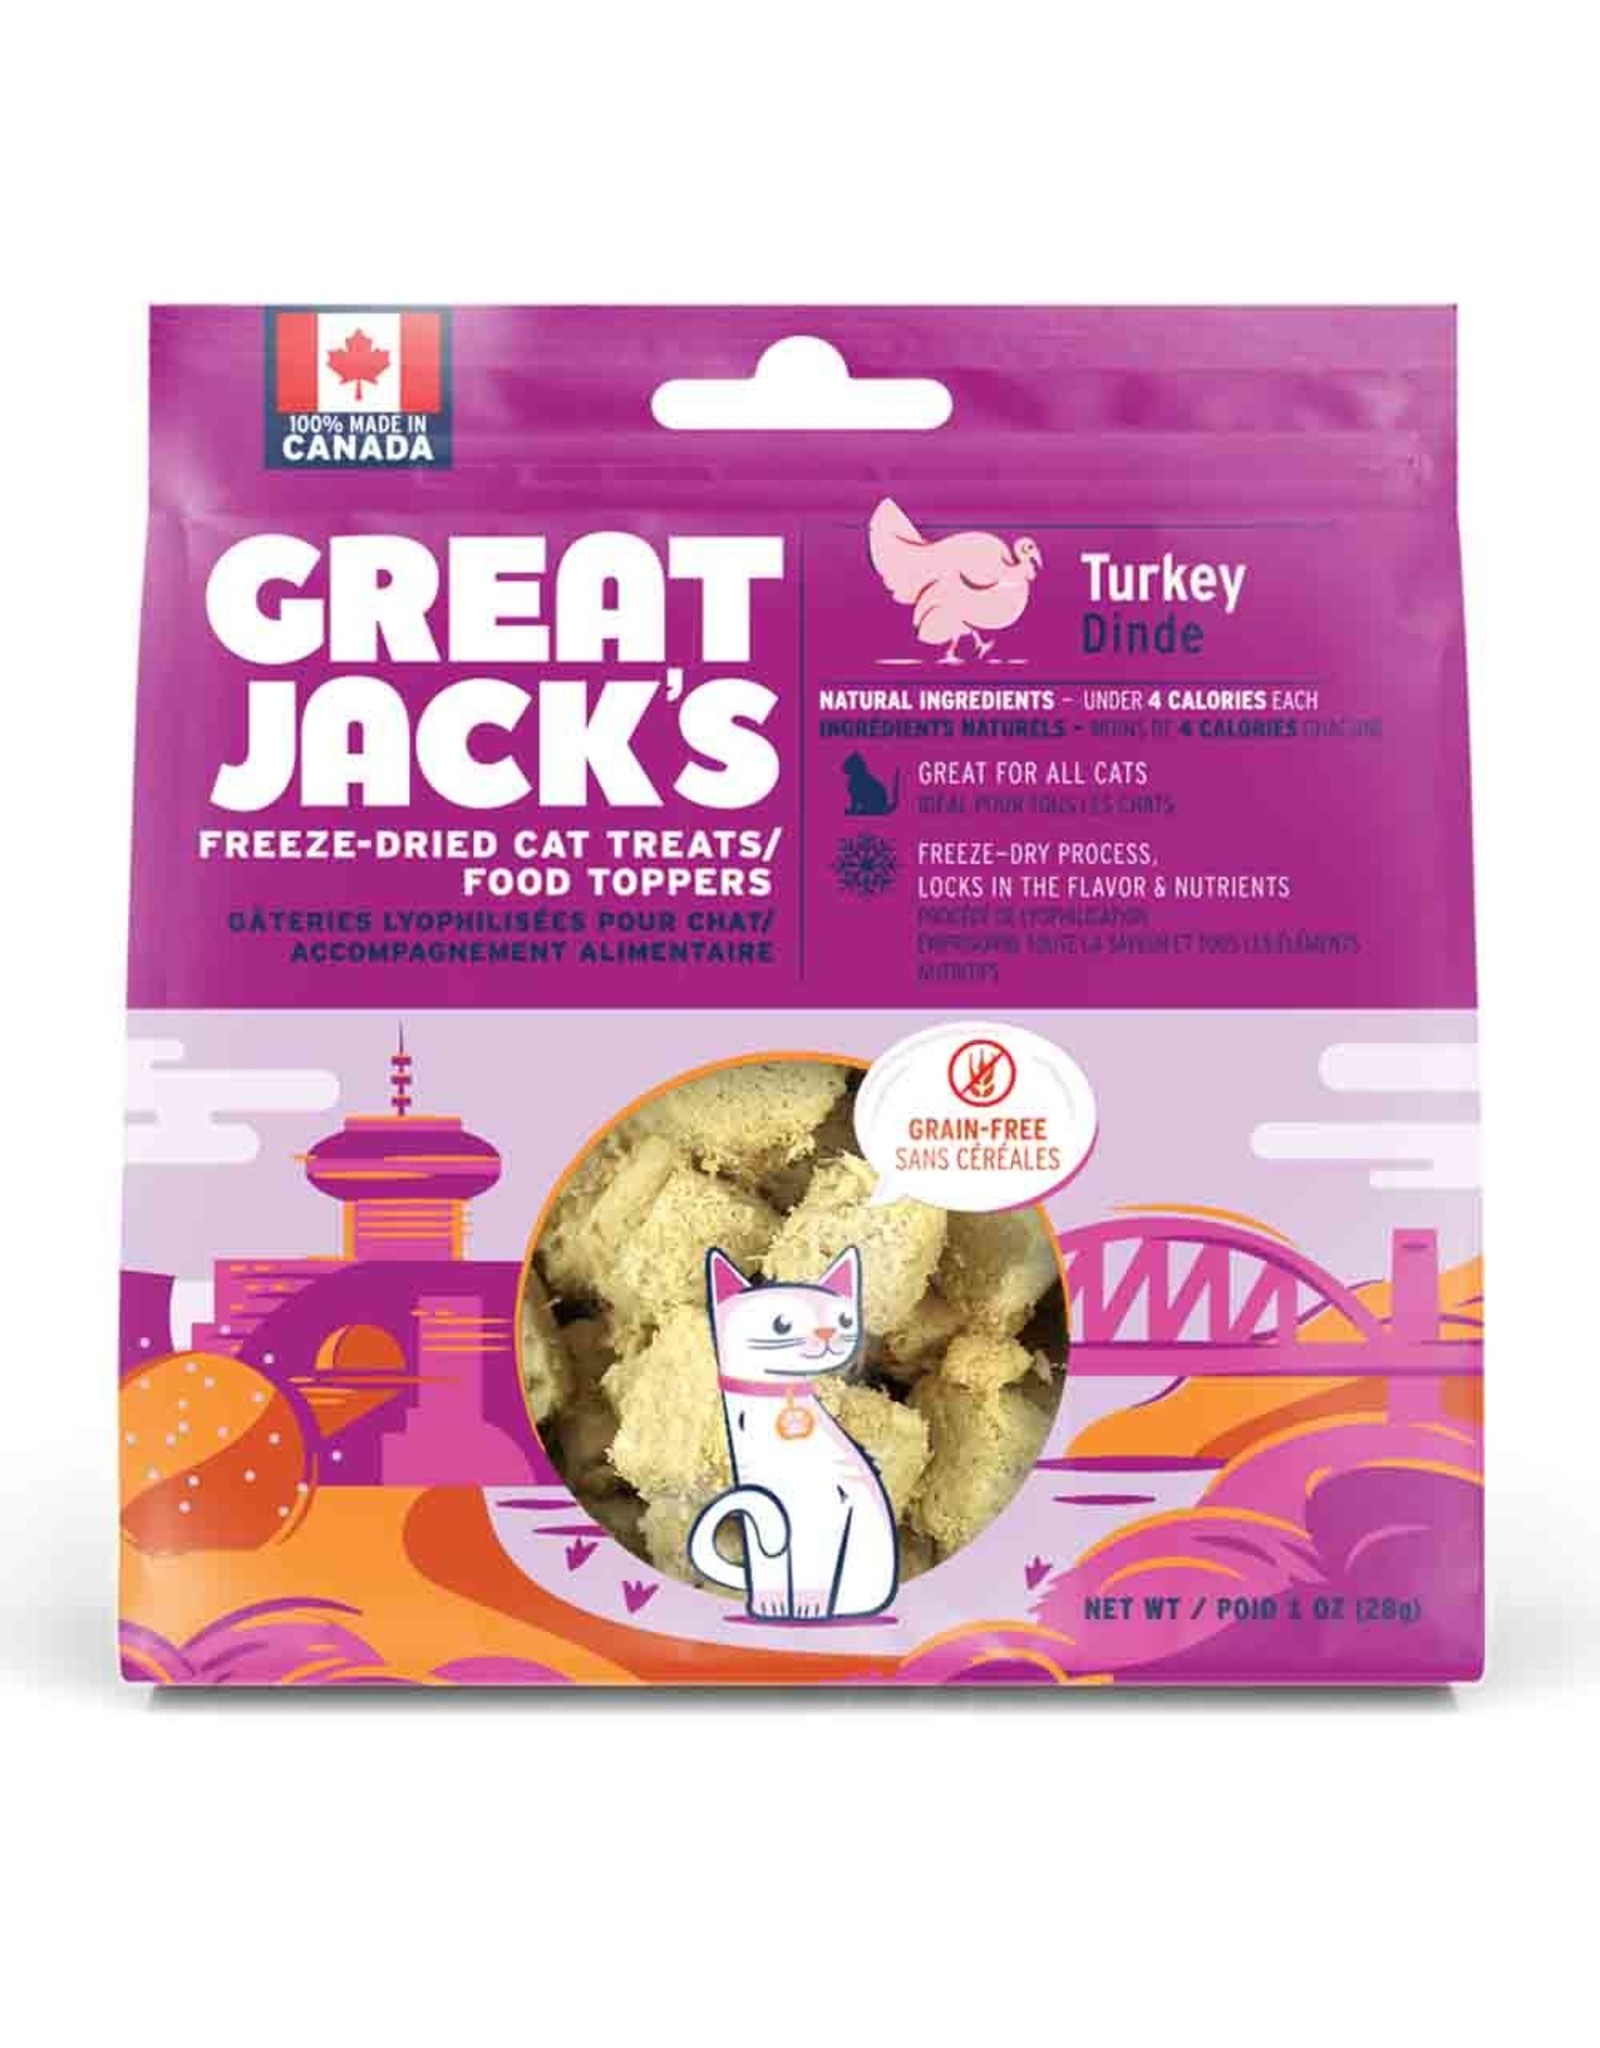 Canadian Jerky Co. Ltd Great Jacks Freeze-Dried Cat Treats & Food Topper